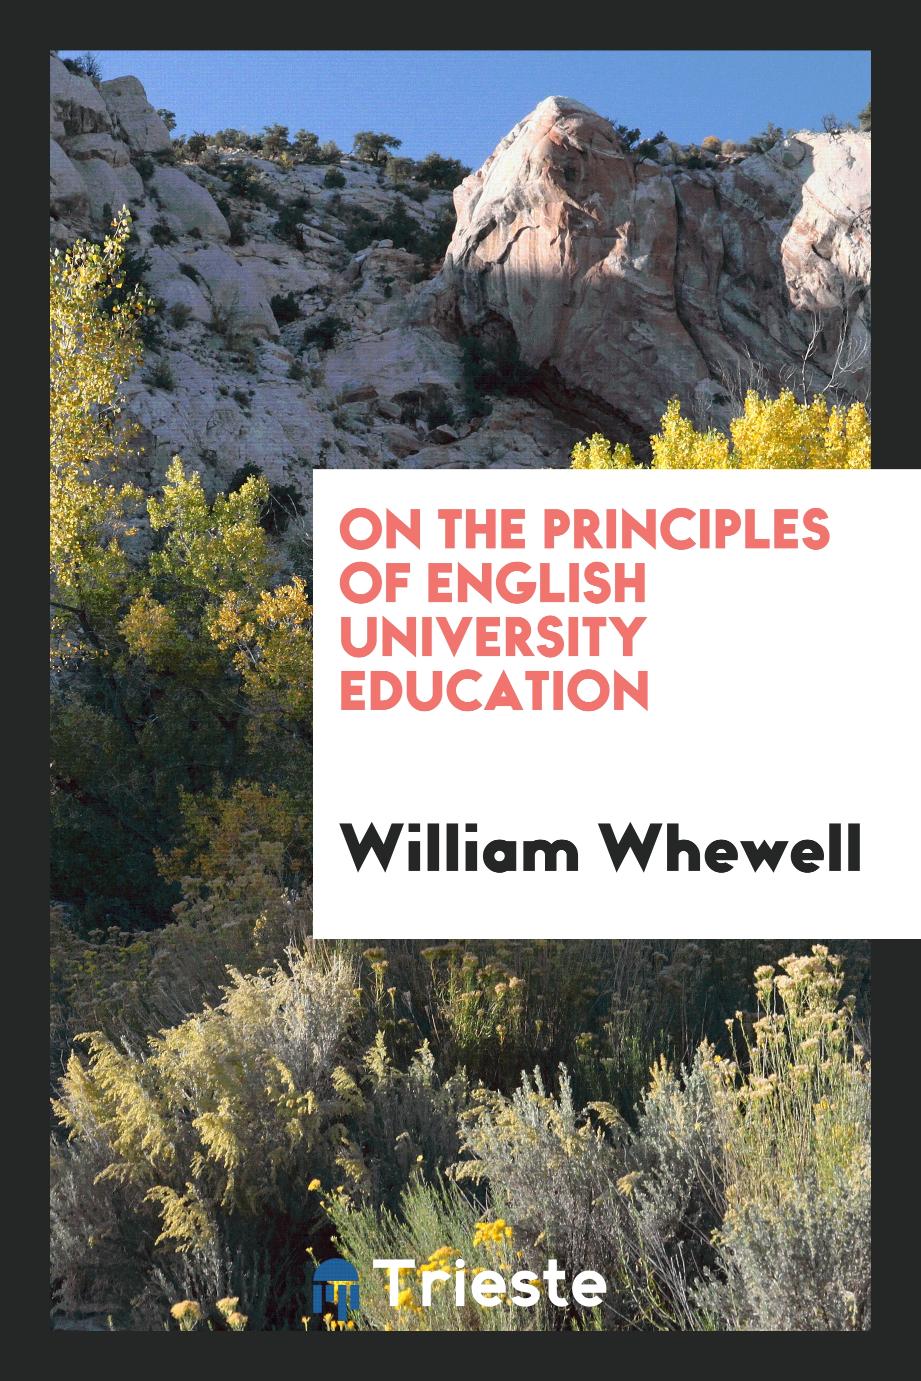 On the principles of English university education